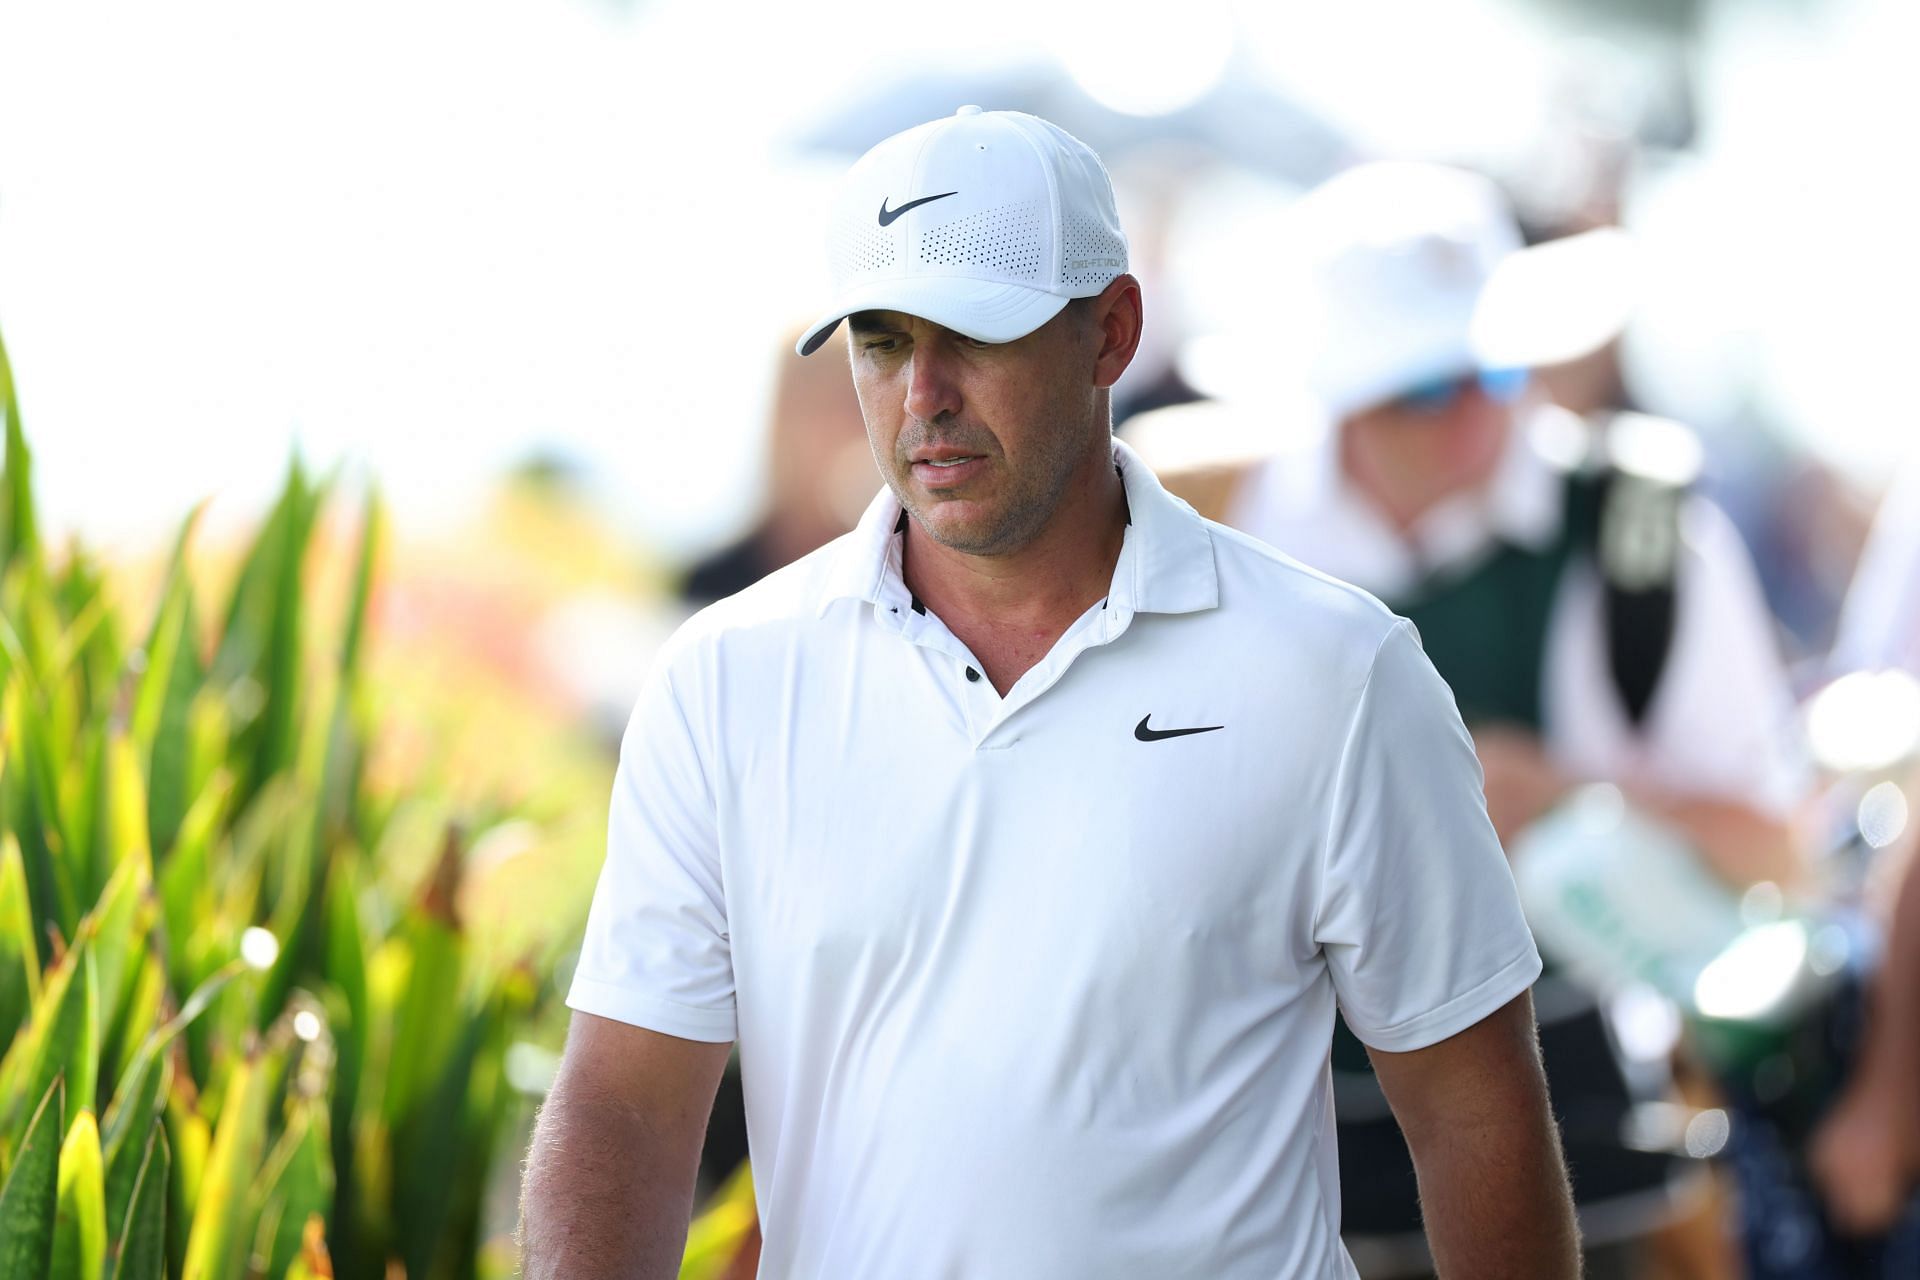 Brooks Koepka will be among LIV Golf members at the PGA Championship